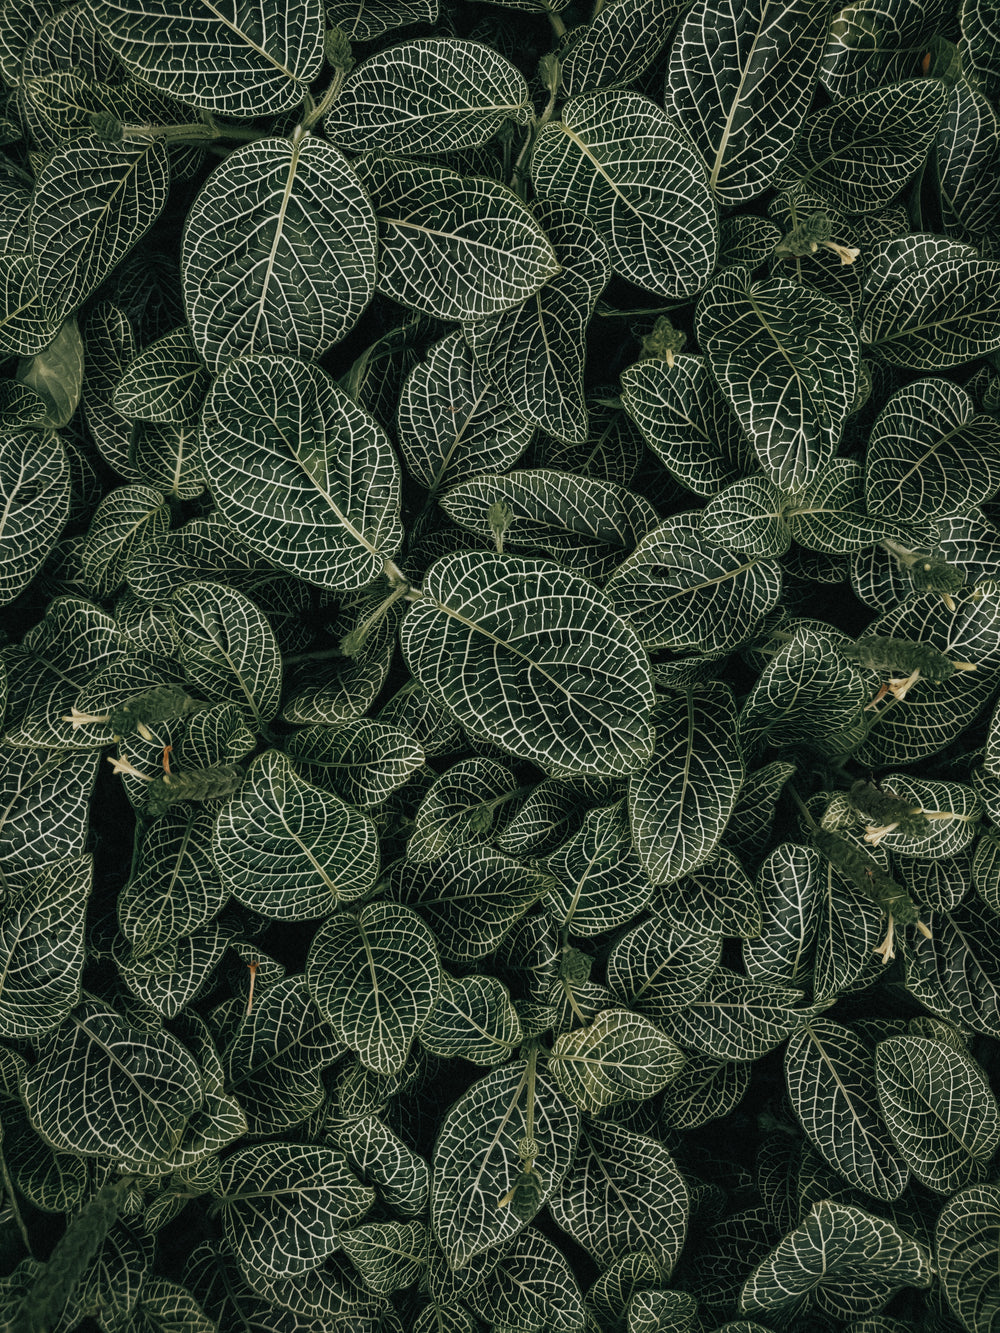 deep green leaves white veins